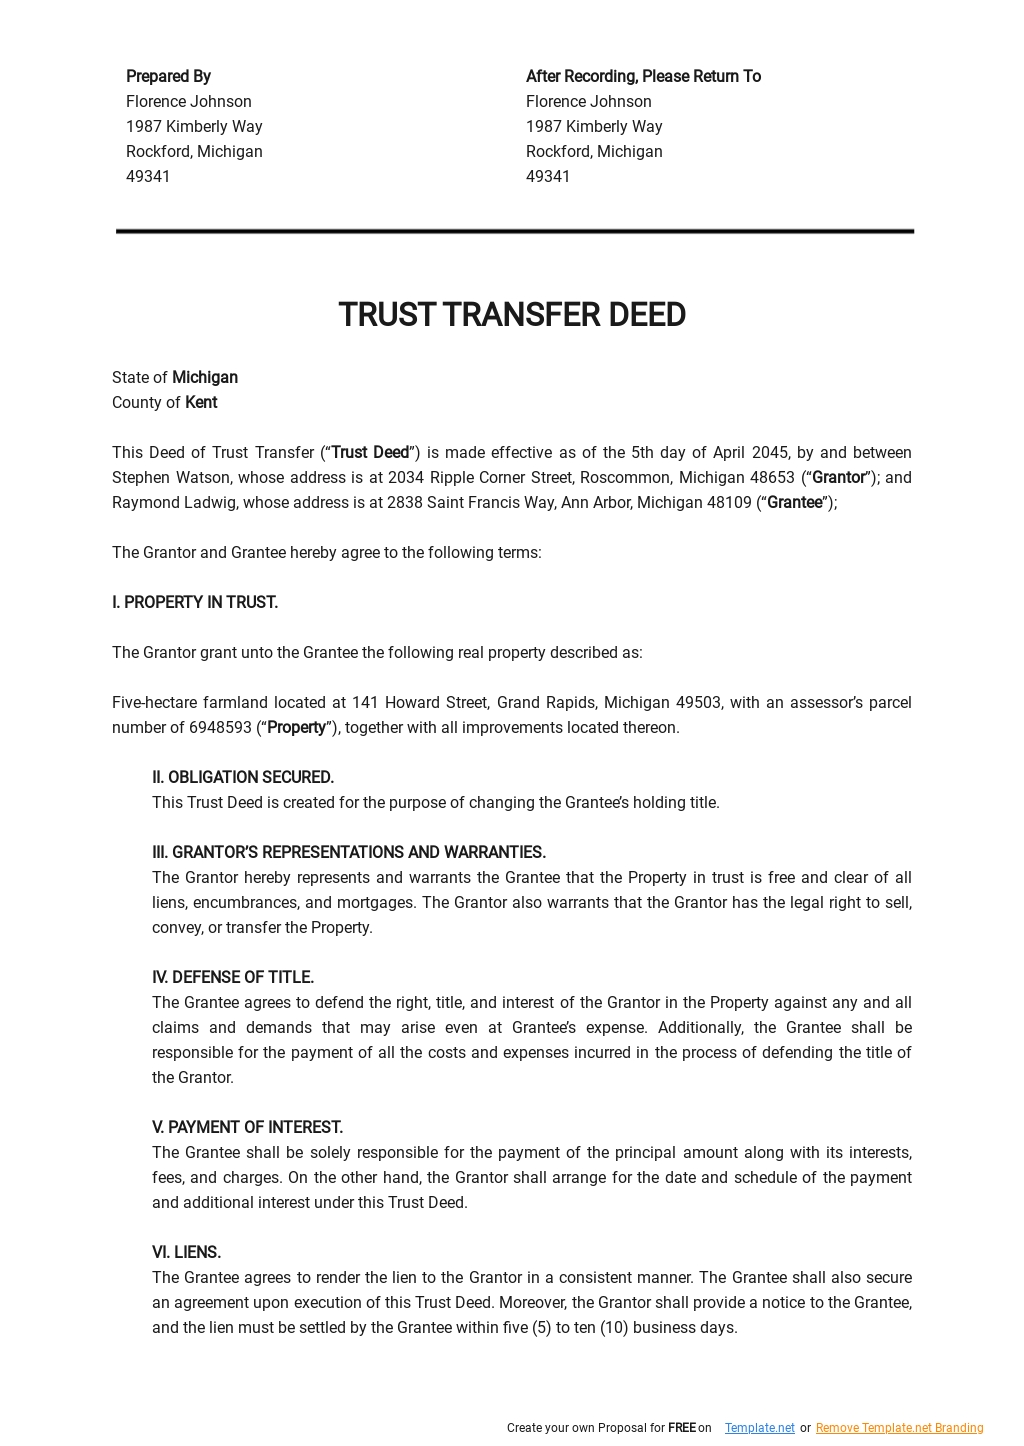 Trust Transfer Deed Template